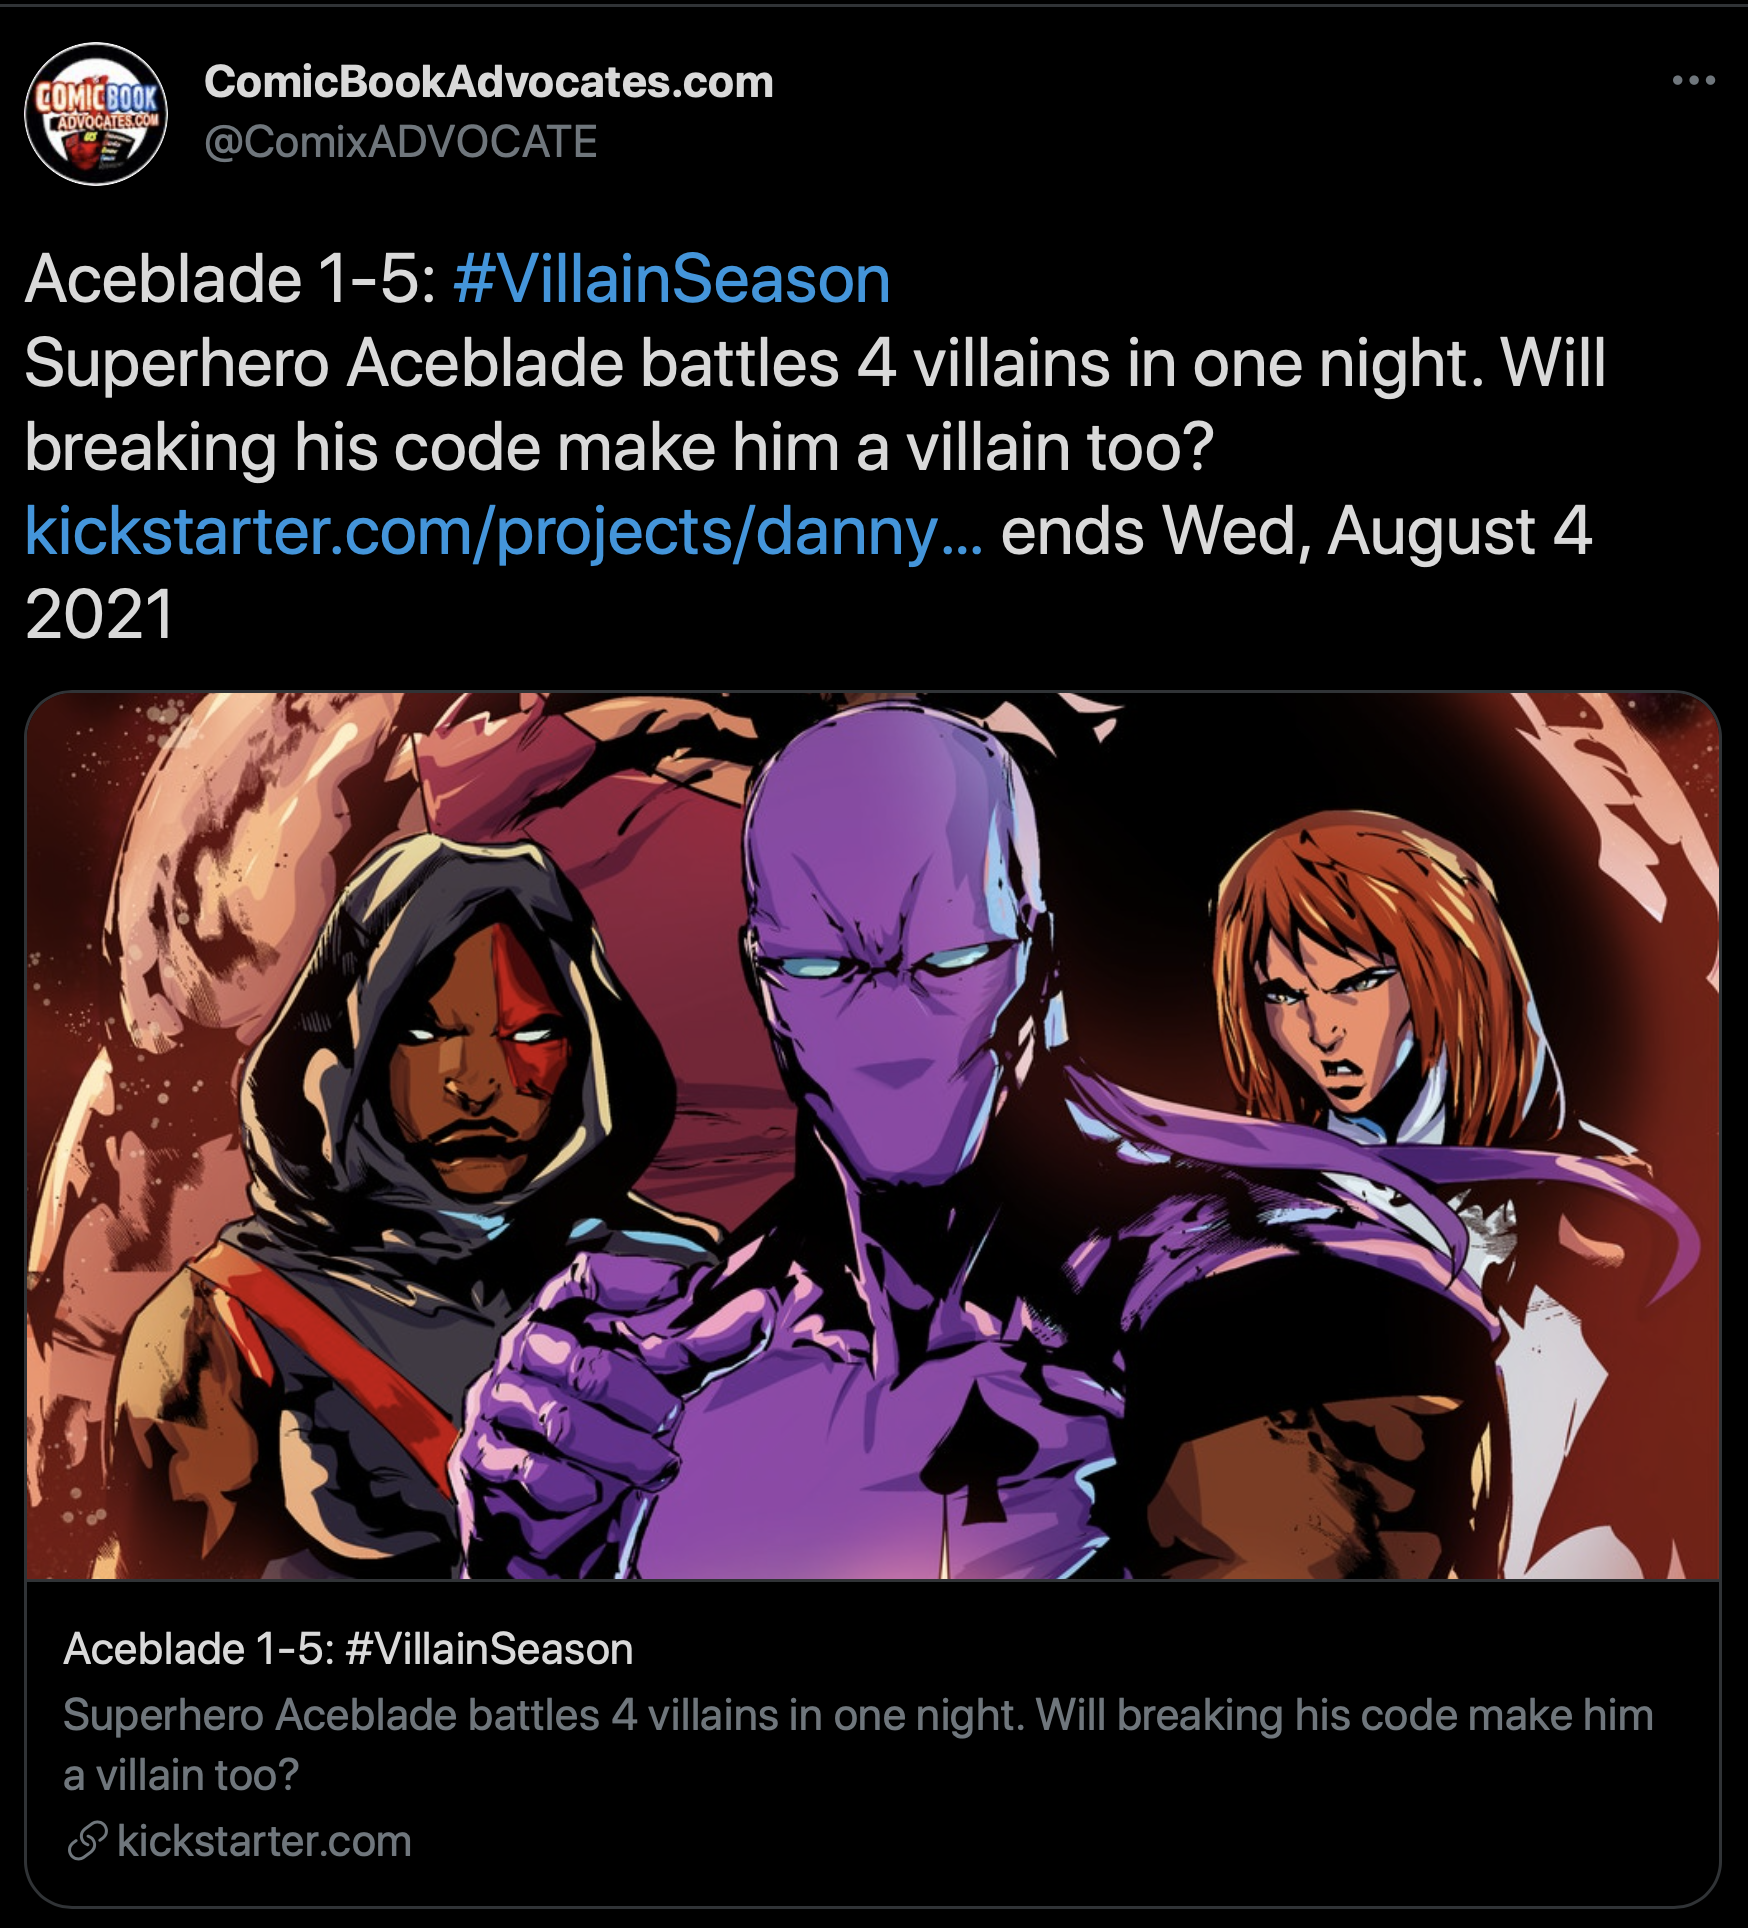 Aceblade 1-5: #VillainSeason Superhero Aceblade battles 4 villains in one night. Will breaking his code make him a villain too?